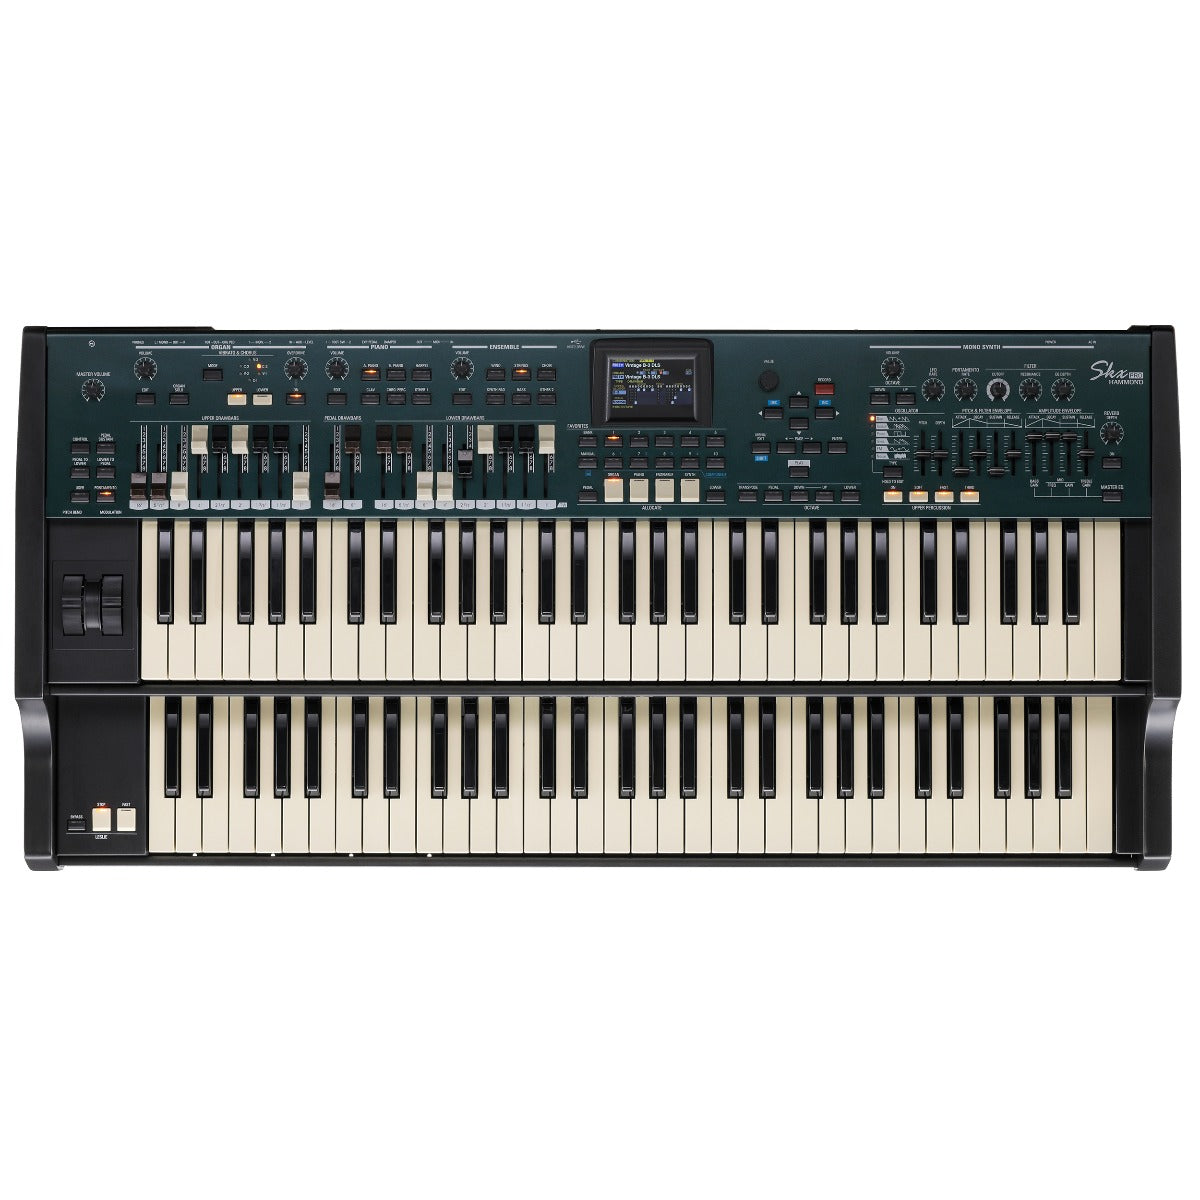 Hammond Skx Pro Dual Manual Stage Keyboard - View 2